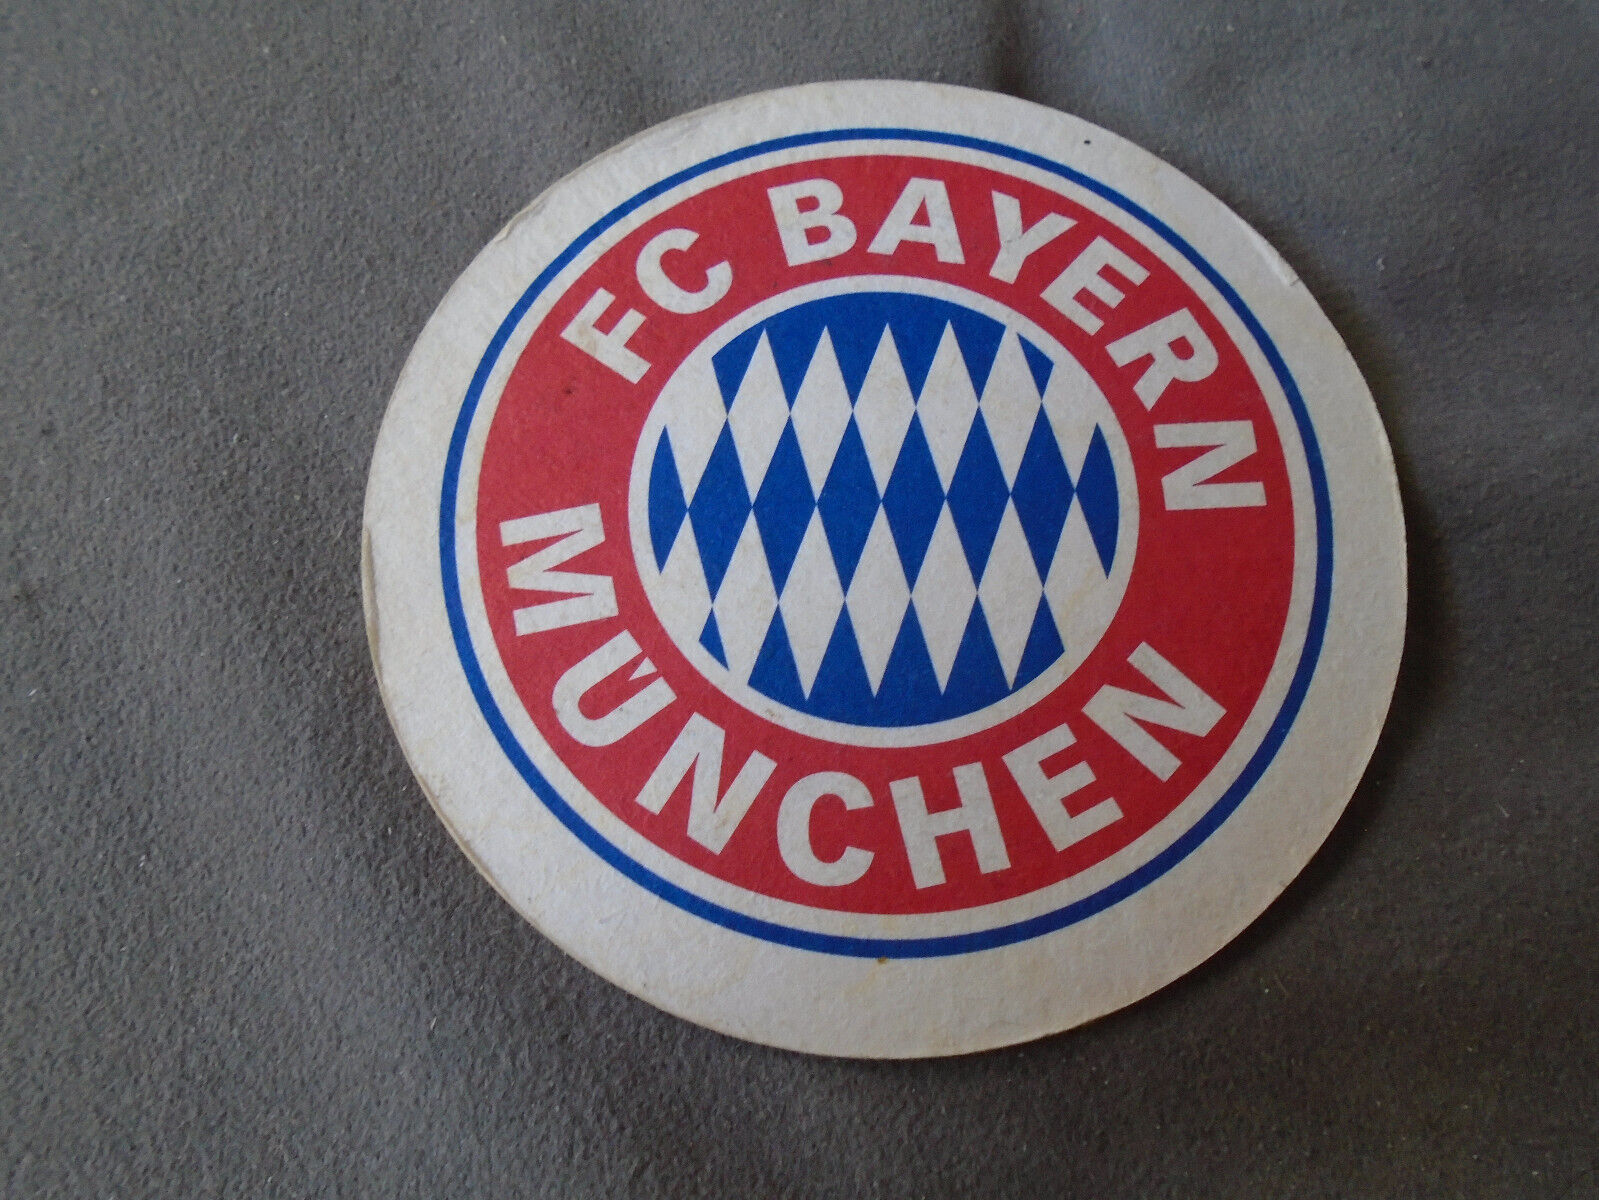 FC Bayern munchen beer coaster 2